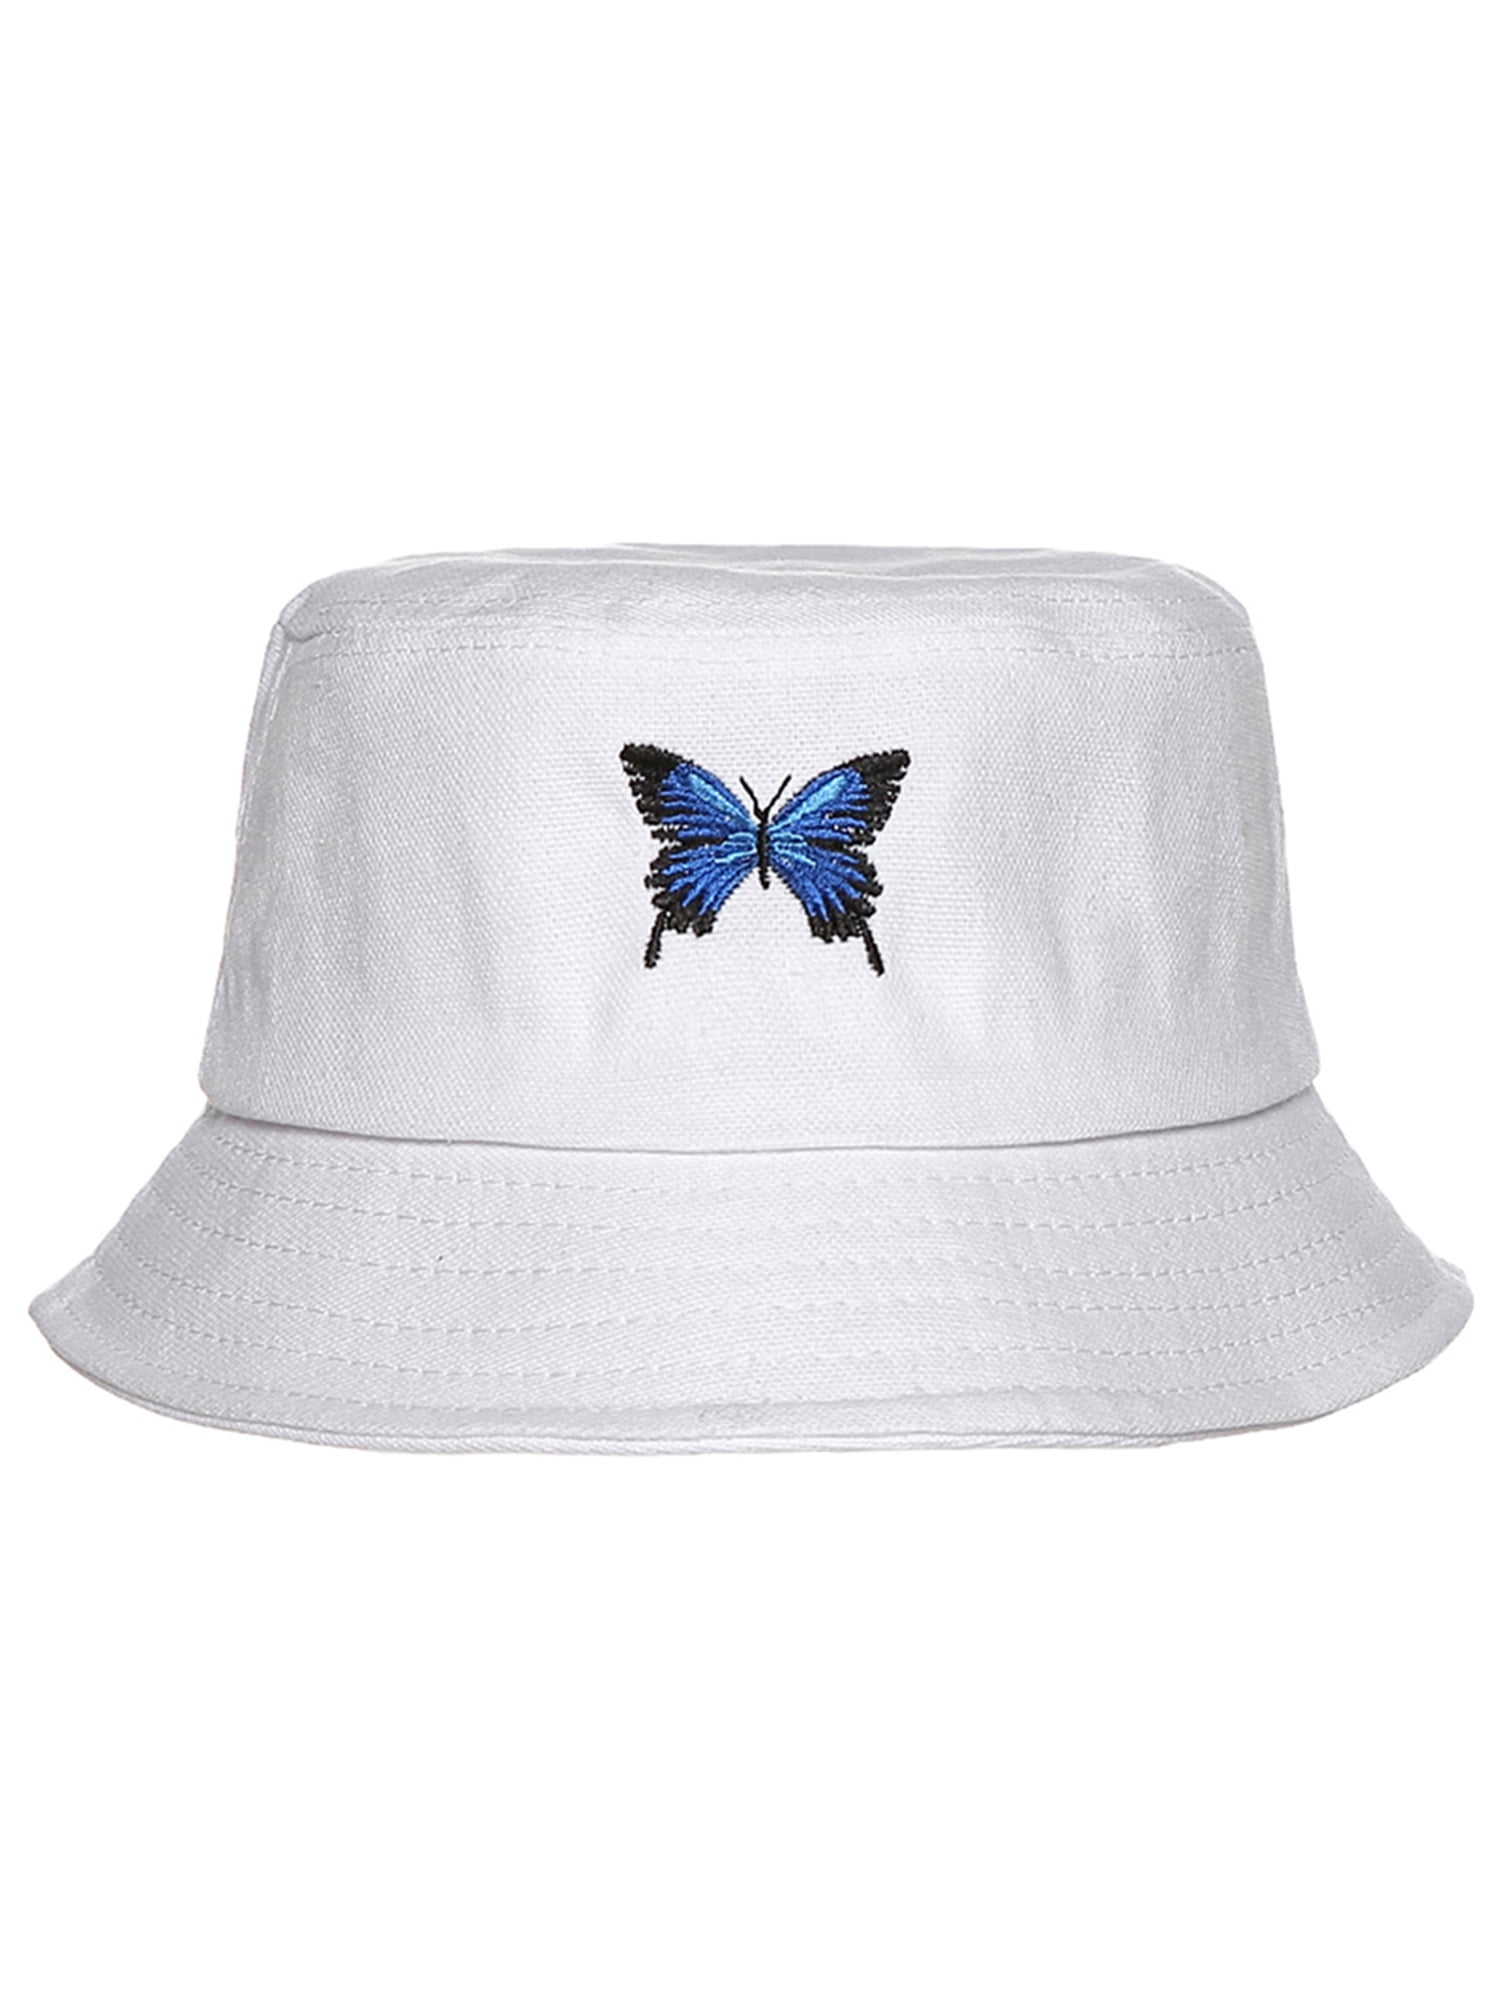 3D Dancing Bears Spiral Fashion Caps,Unisex Bucket Hat Summer Fisherman Cap for Women Men